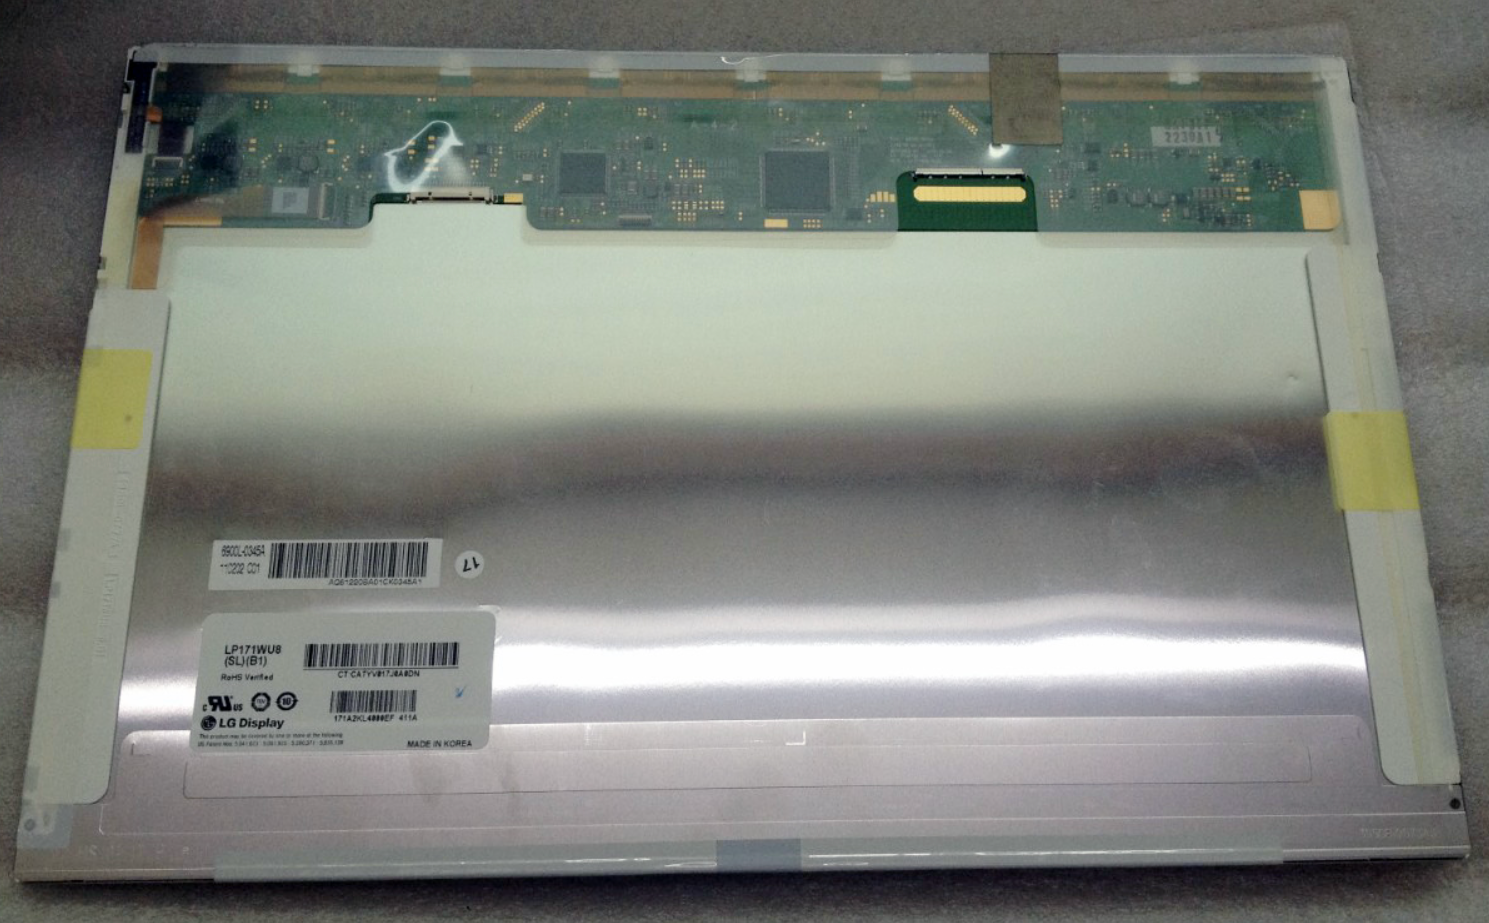  Матрица для ноутбука 17,1 дюймовая ЖК-панель для HP 8730W LP171WU8-SLB1 LP171WU8(SL)(B1) LP171WU8 SLB1,